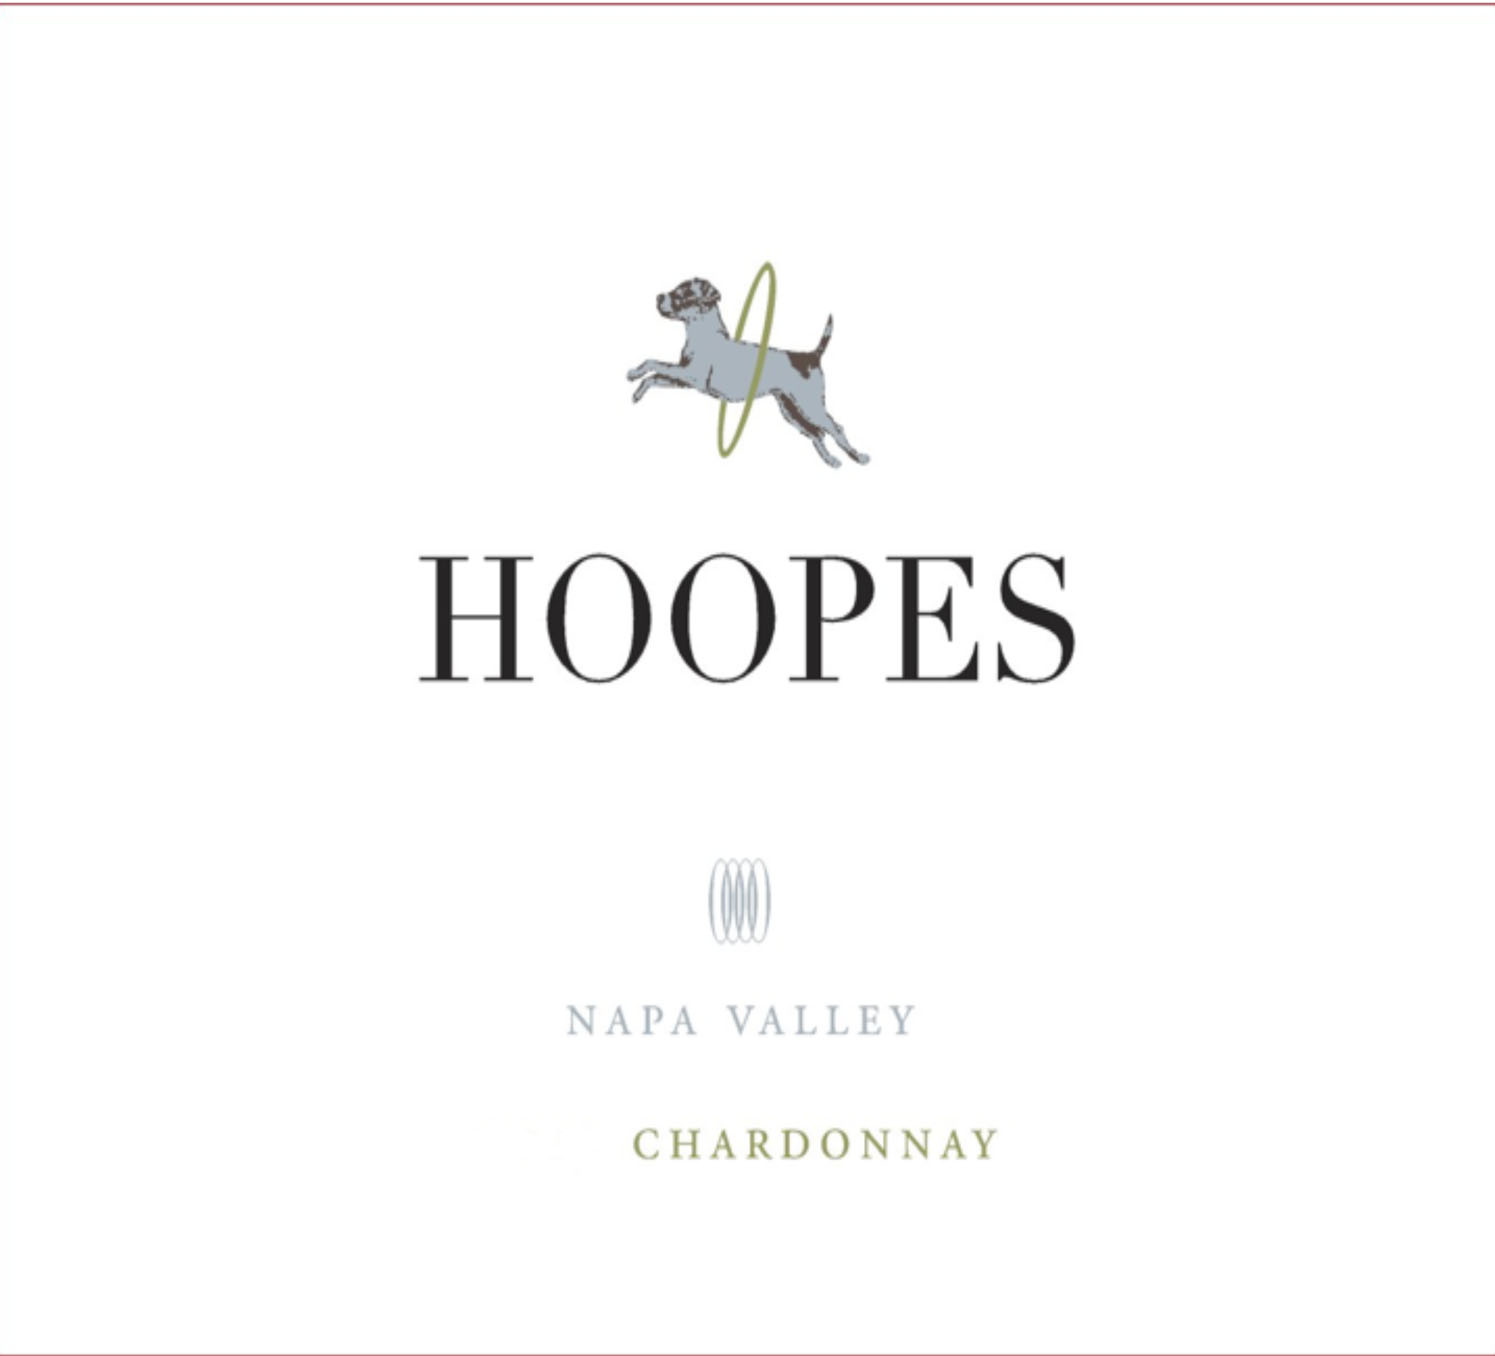 Hoopes - Chardonnay label